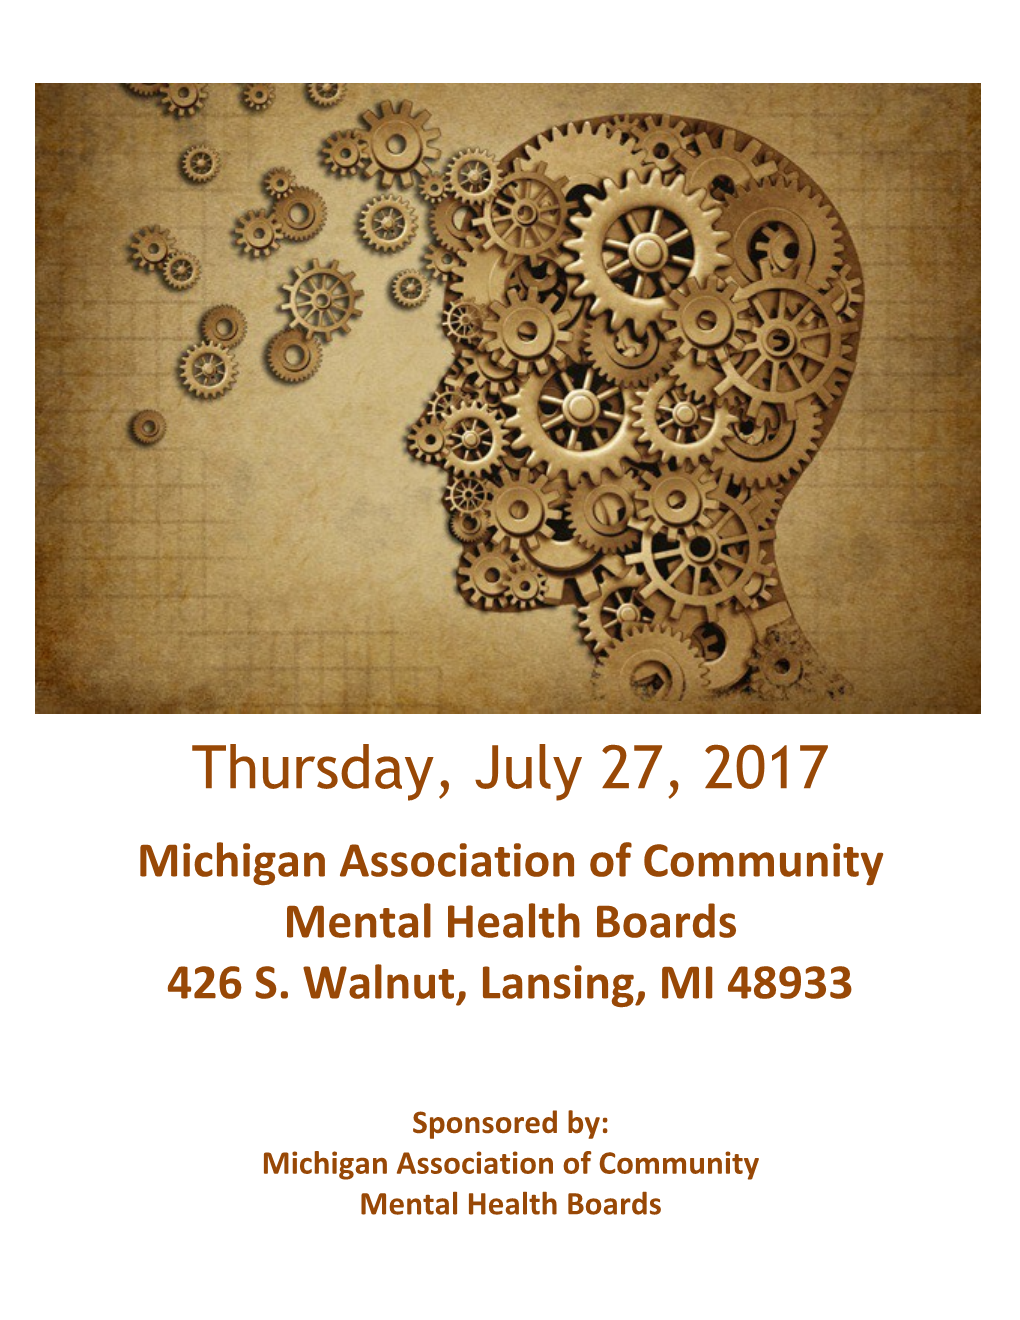 Michigan Association of Community Mental Health Boards 426 S. Walnut, Lansing, MI 48933